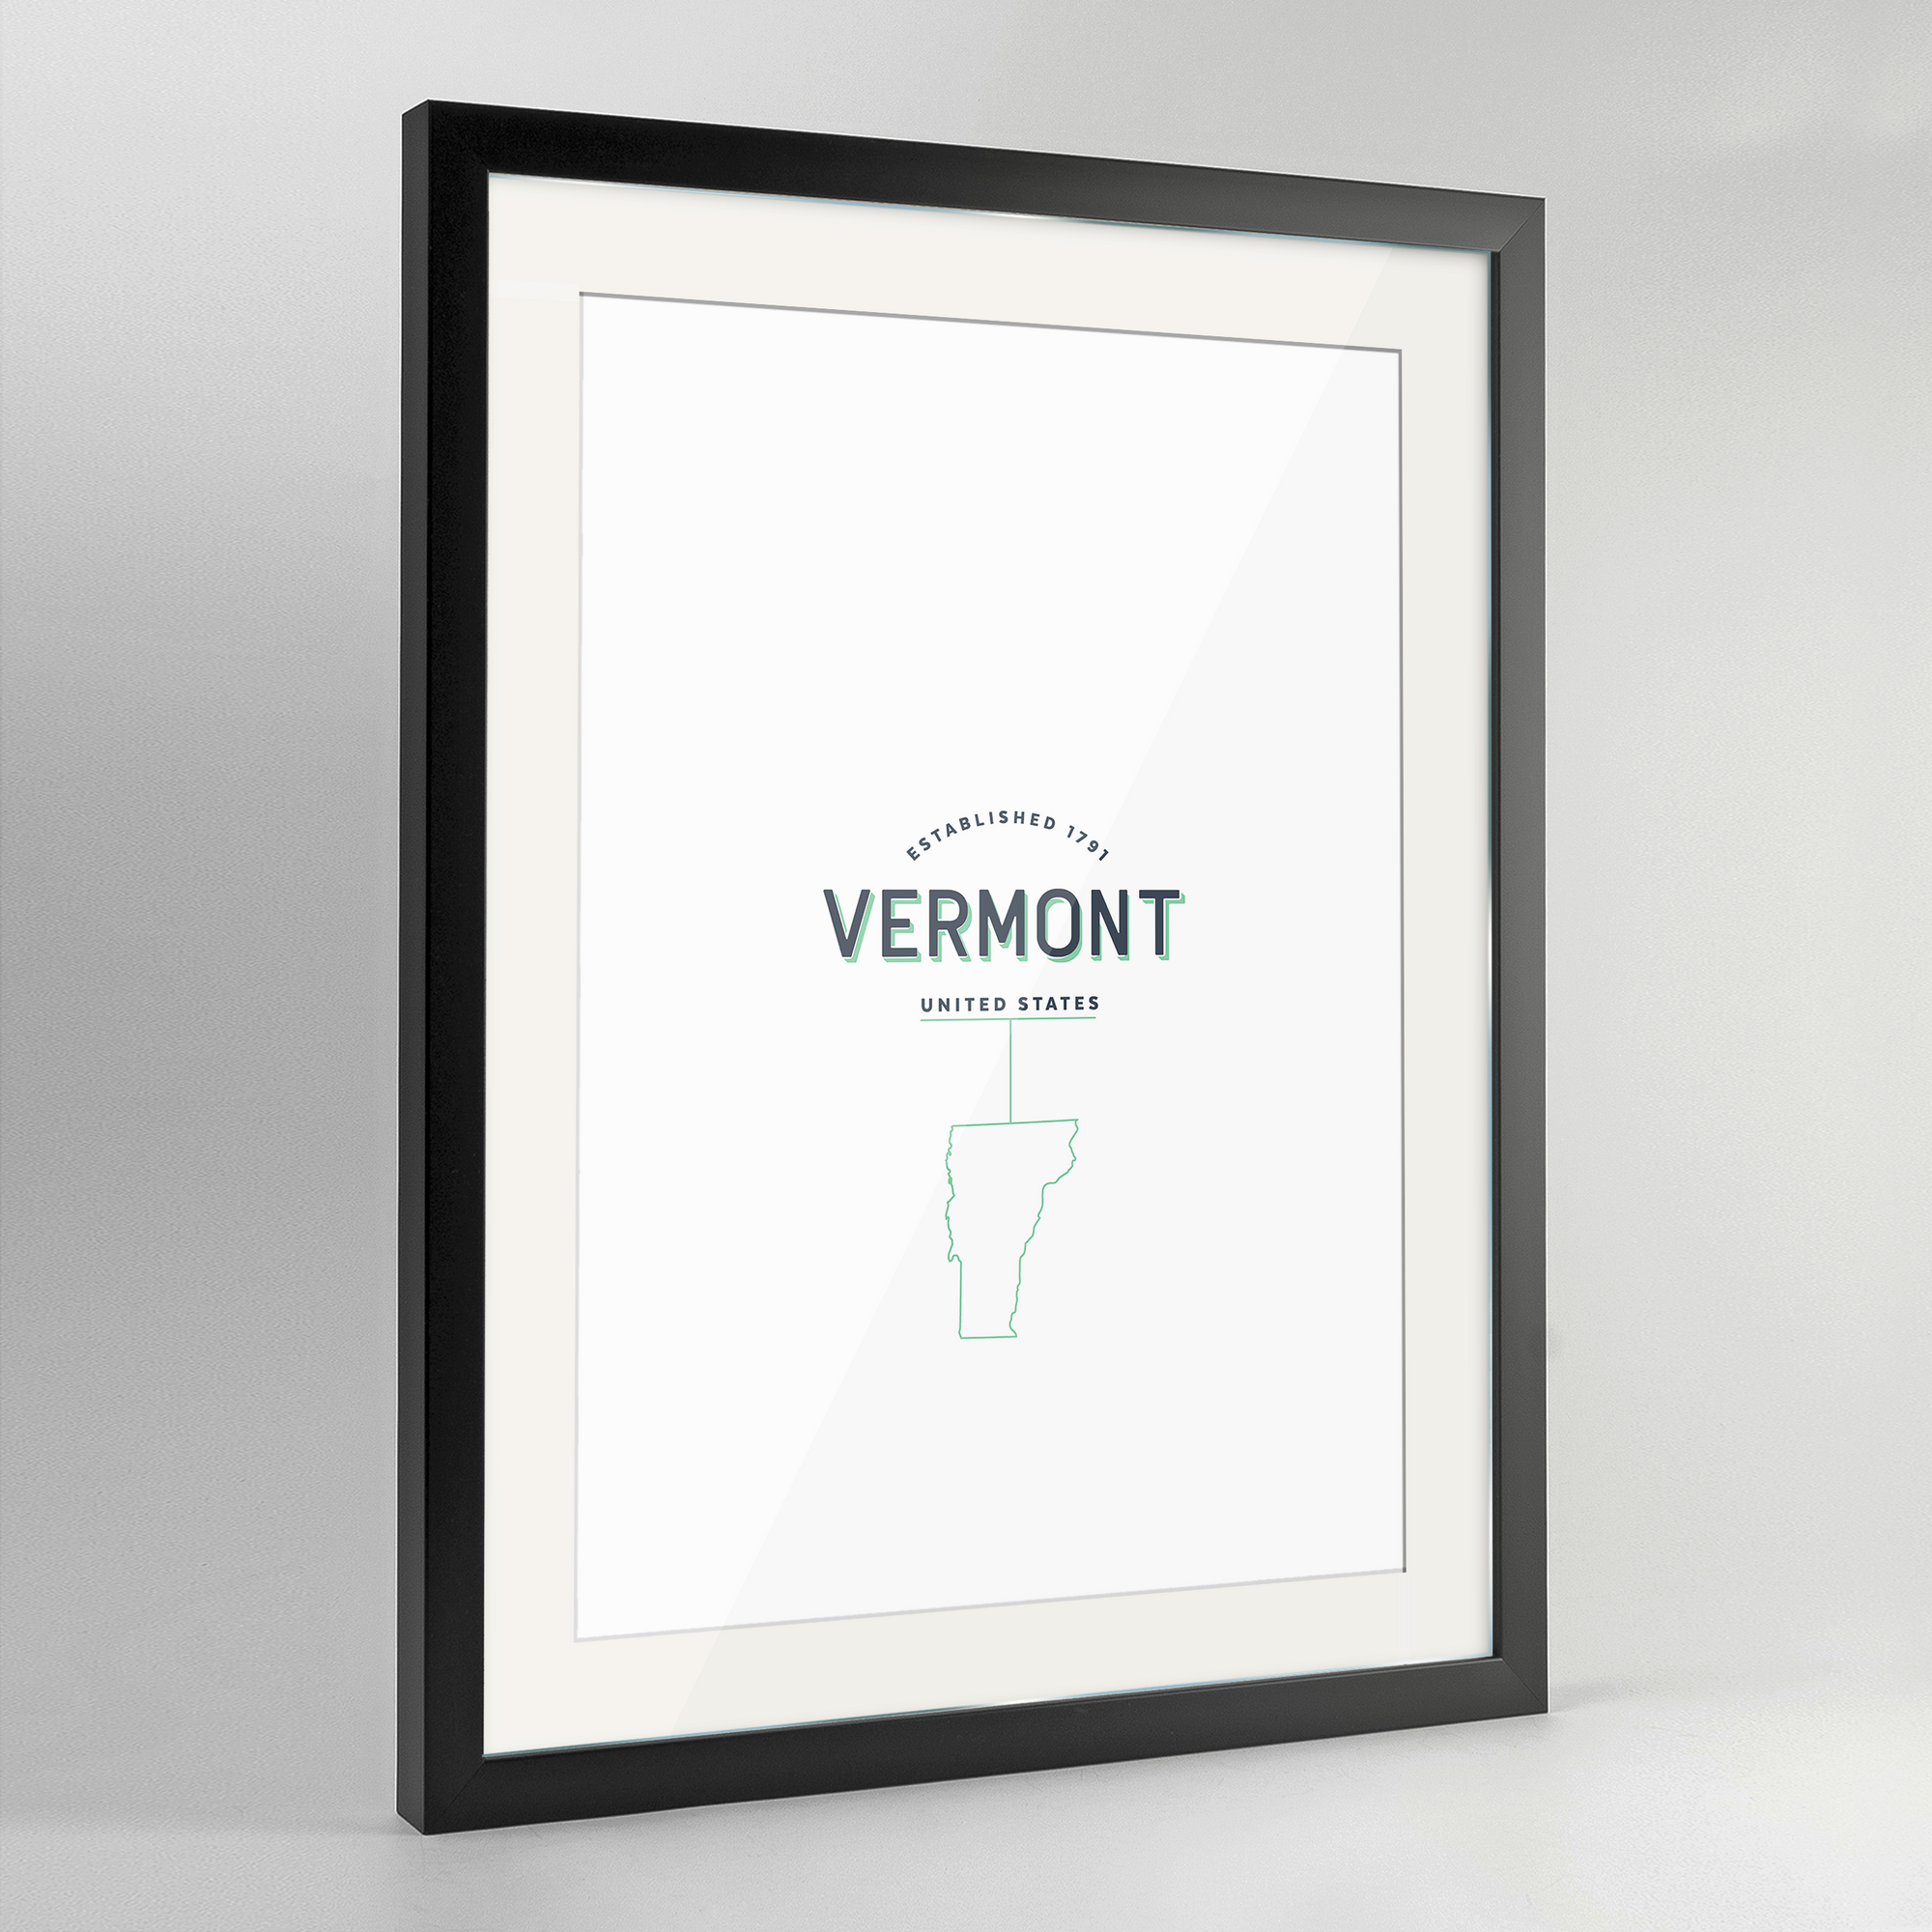 Vermont Word Art